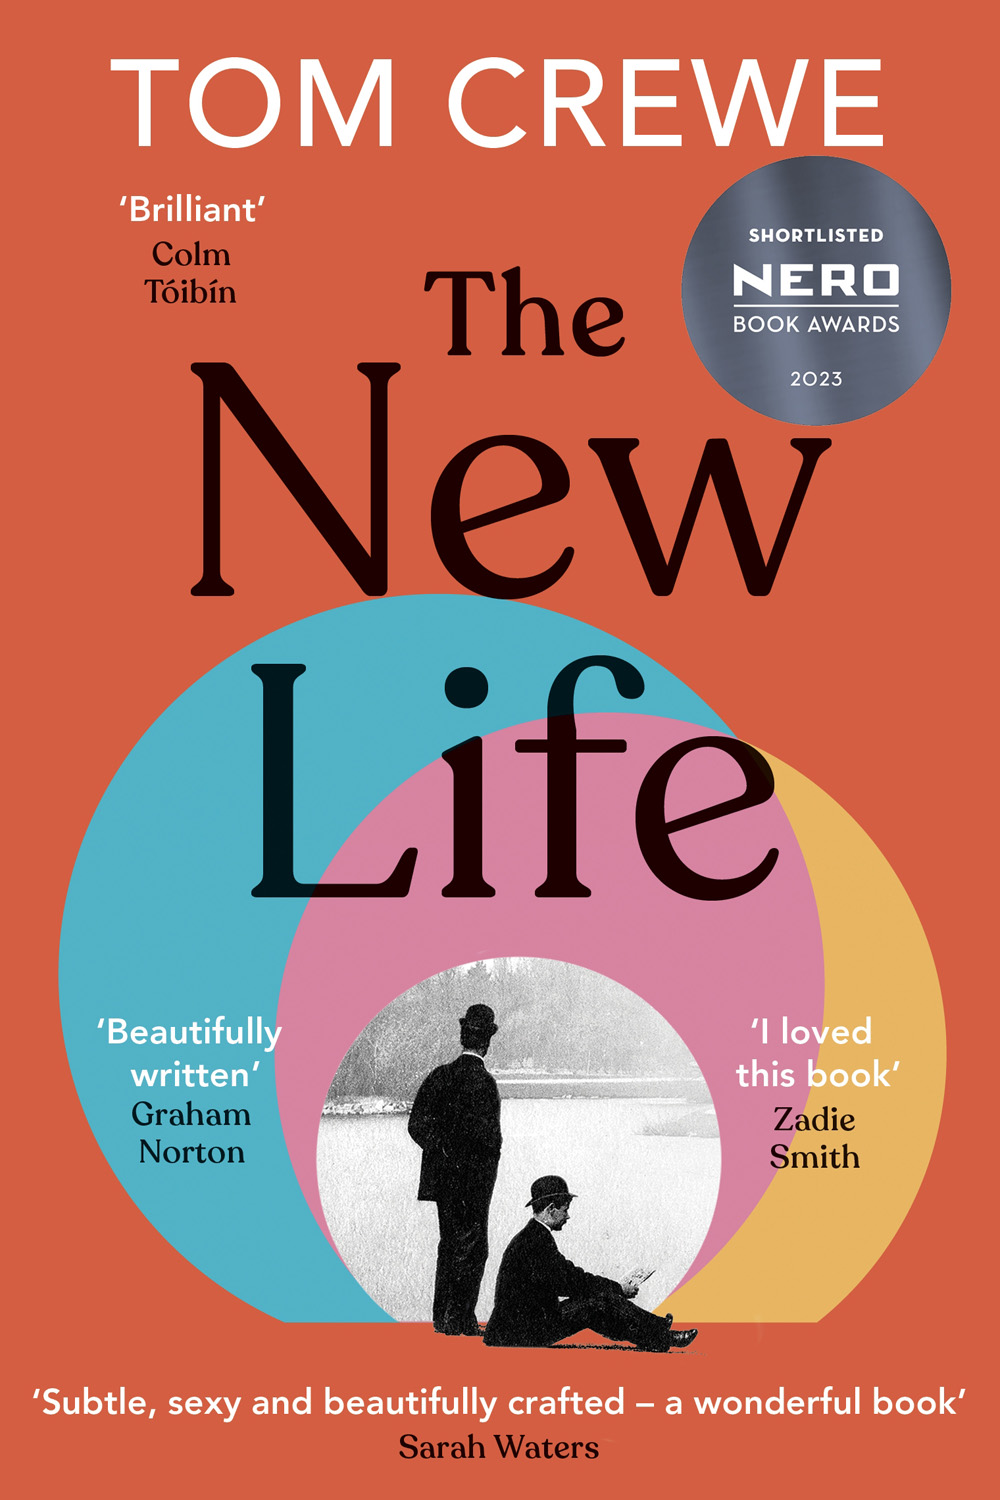 Author Tom Crewe On His Award-Winning Novel, The New Life